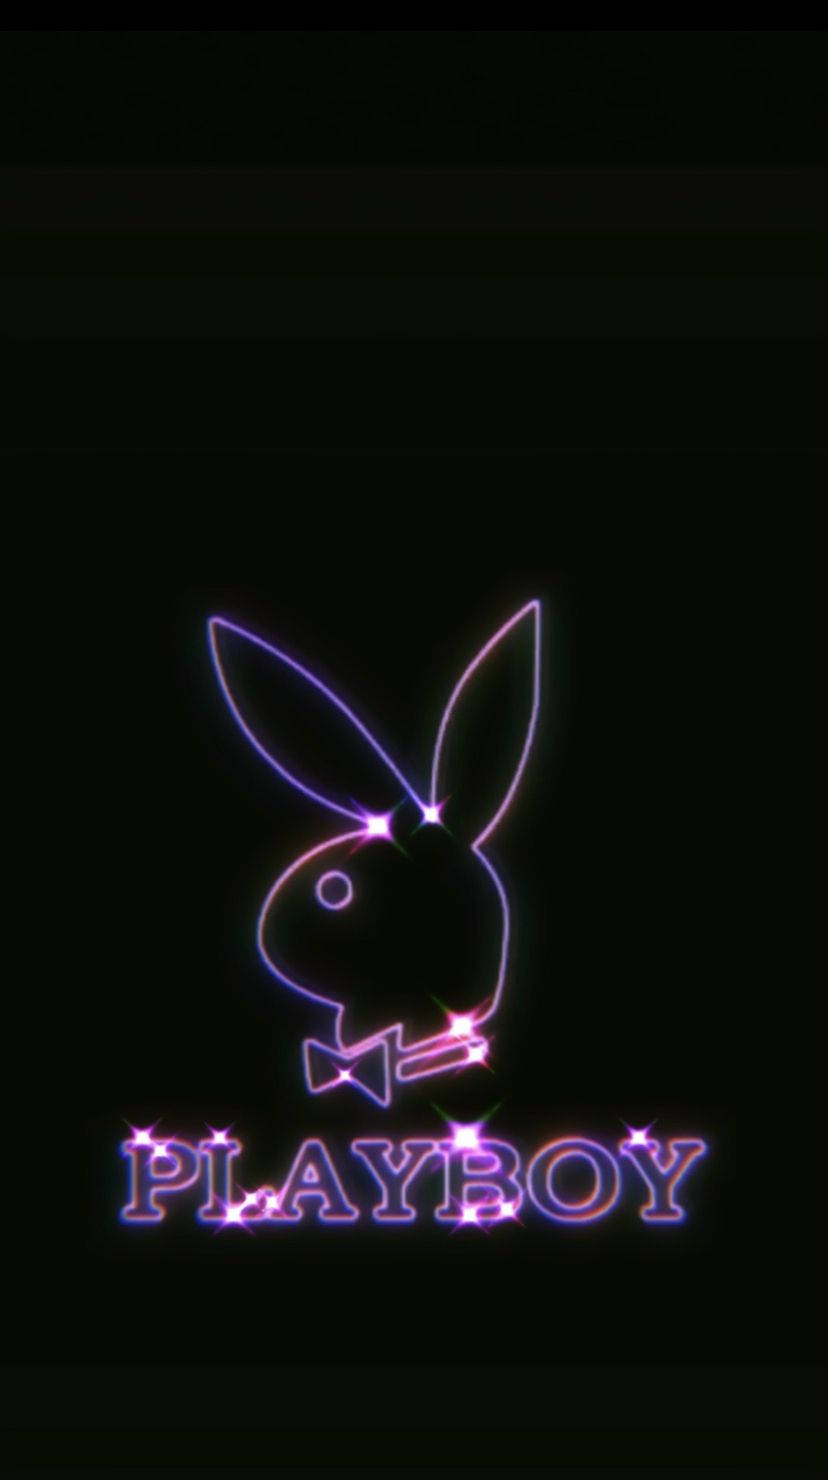 Classic Vintage Playboy Bunny Logo Wallpaper